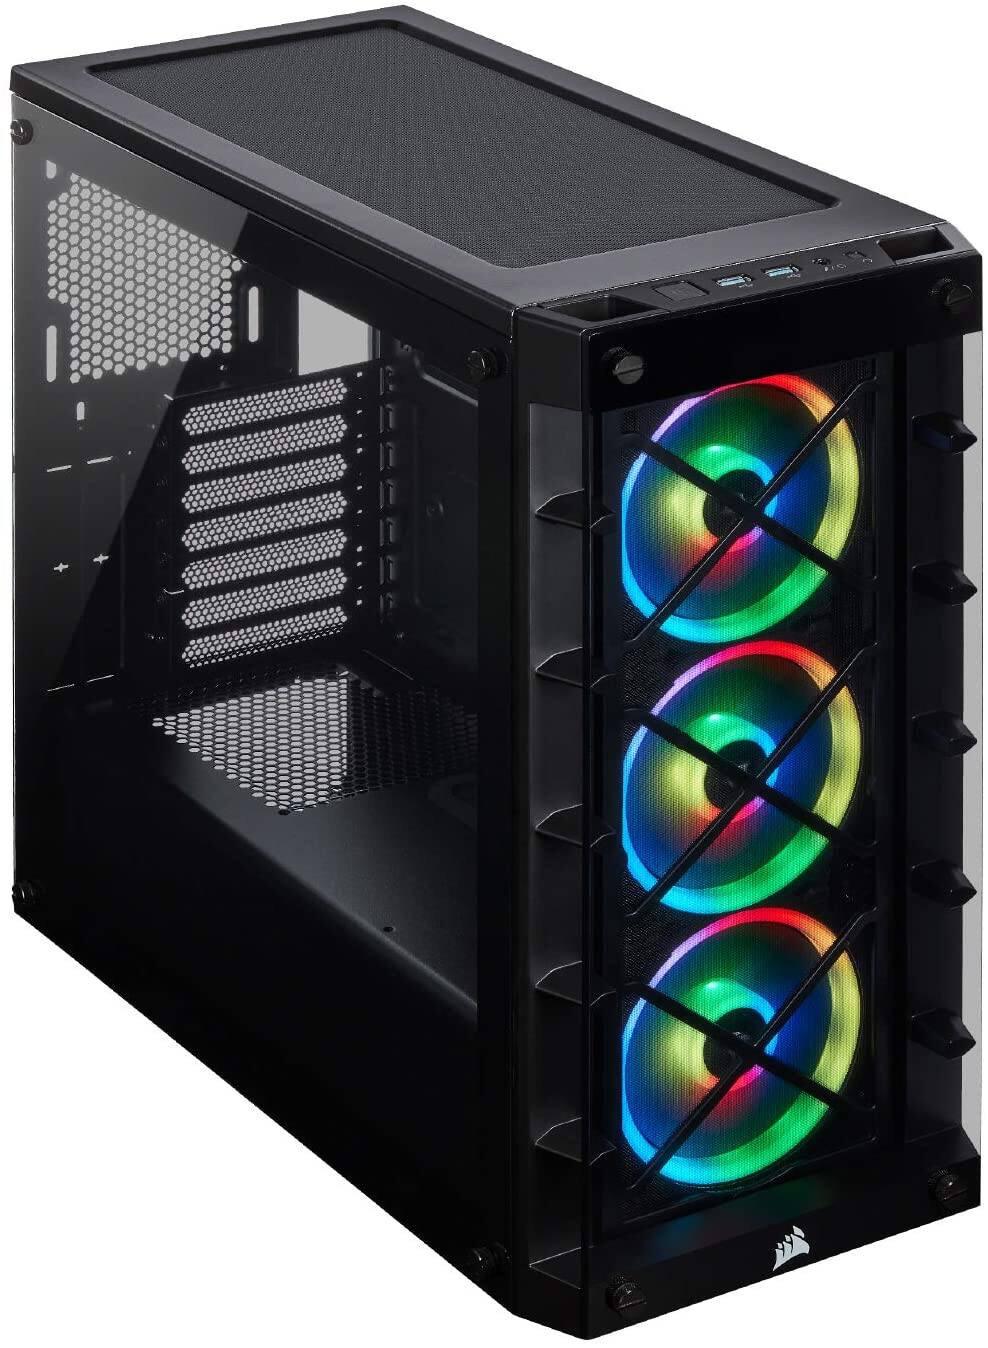 Corsair Icue 465X RGB Mid-Tower ATX Smart Case (Black) $90 + Free Shipping